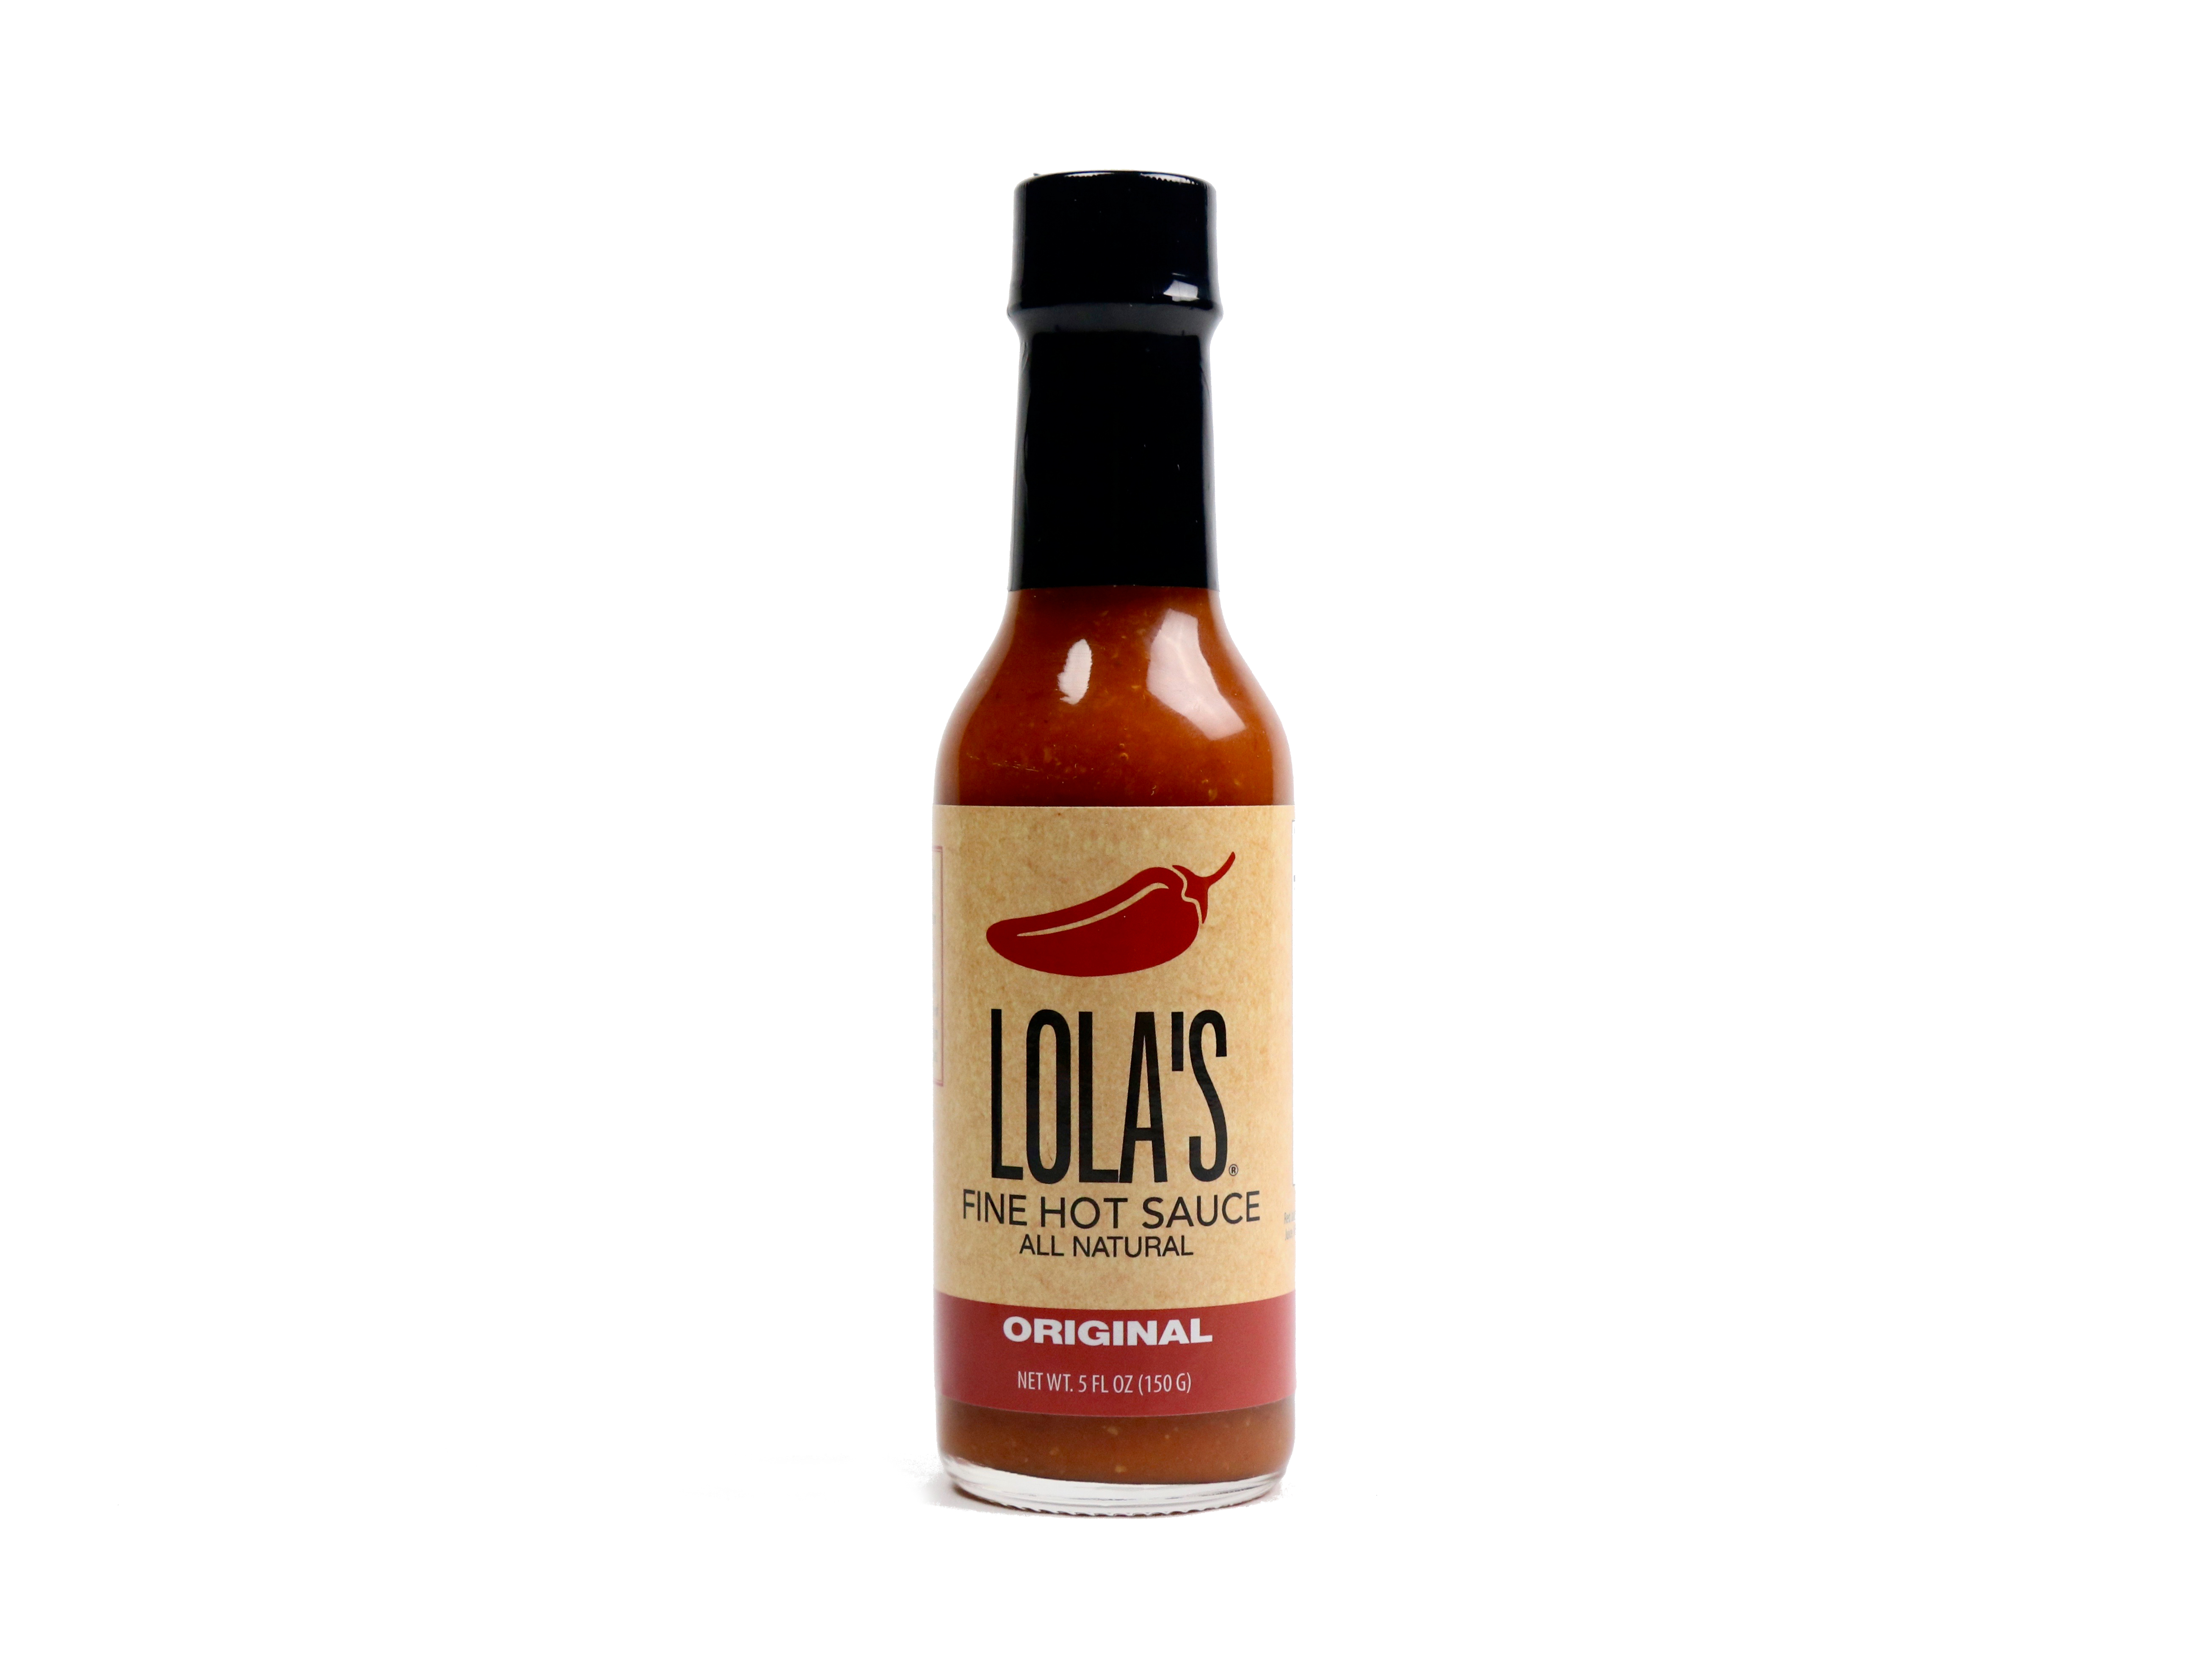 Lola's Fine Hot Sauce, Trinidad Scorpion - 5 fl oz